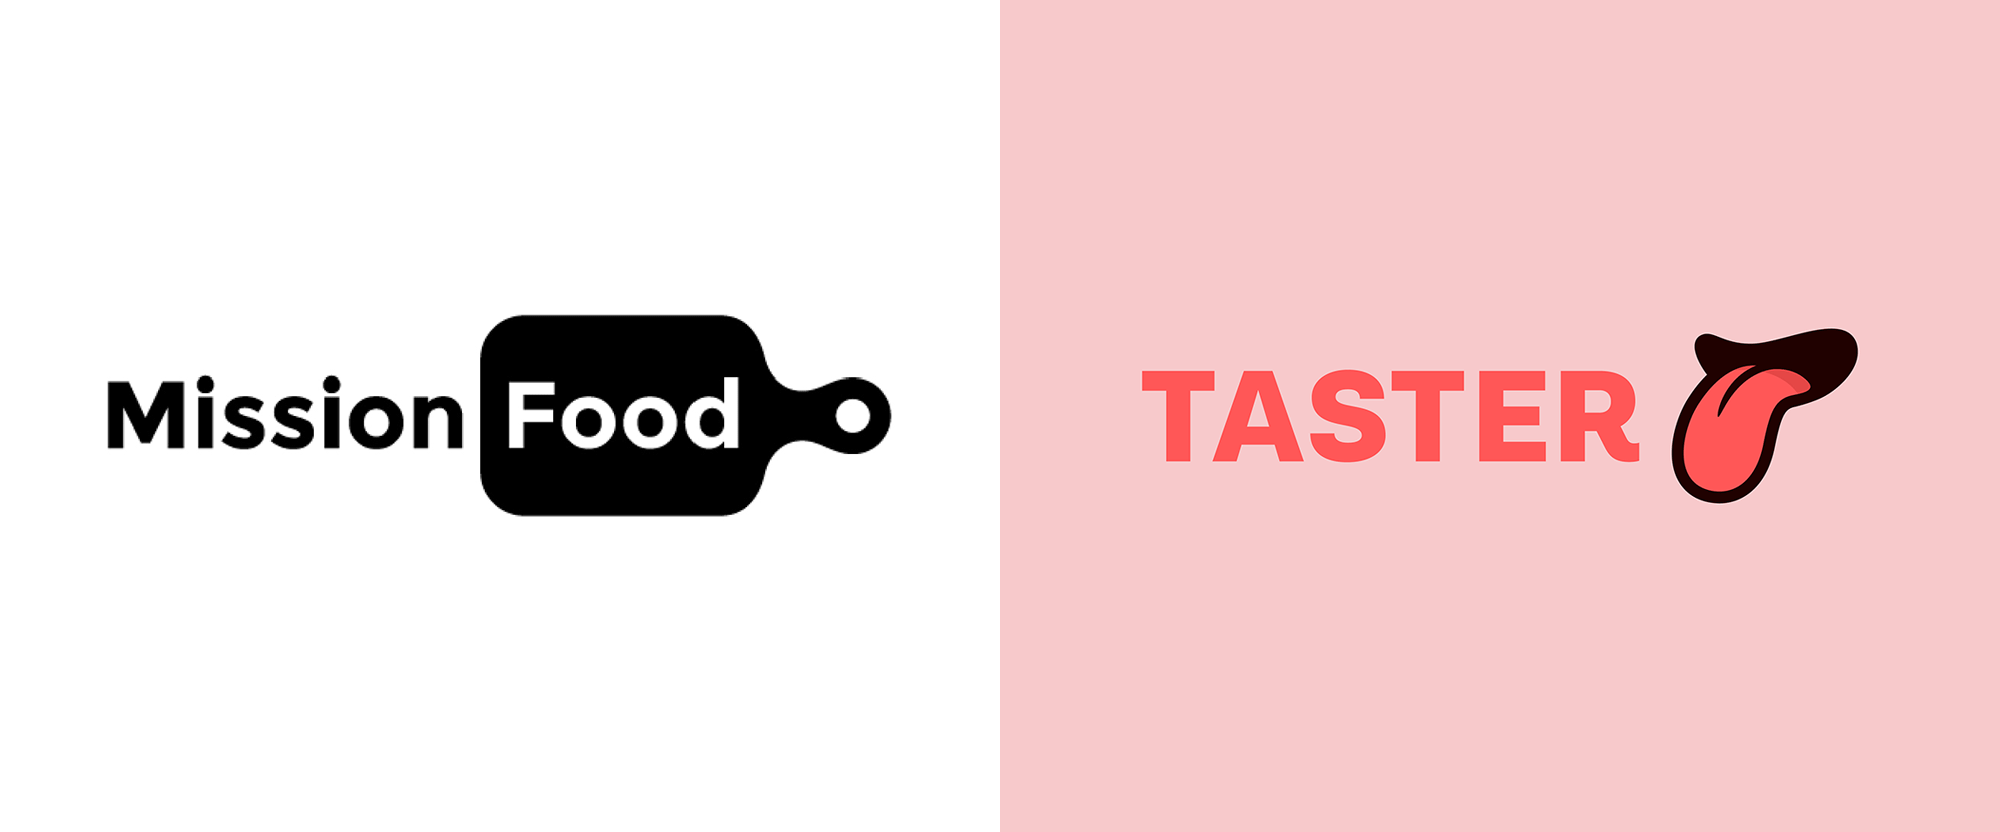 Brand Name Food Logo - Brand New: New Name, Logo, and Identity for Taster